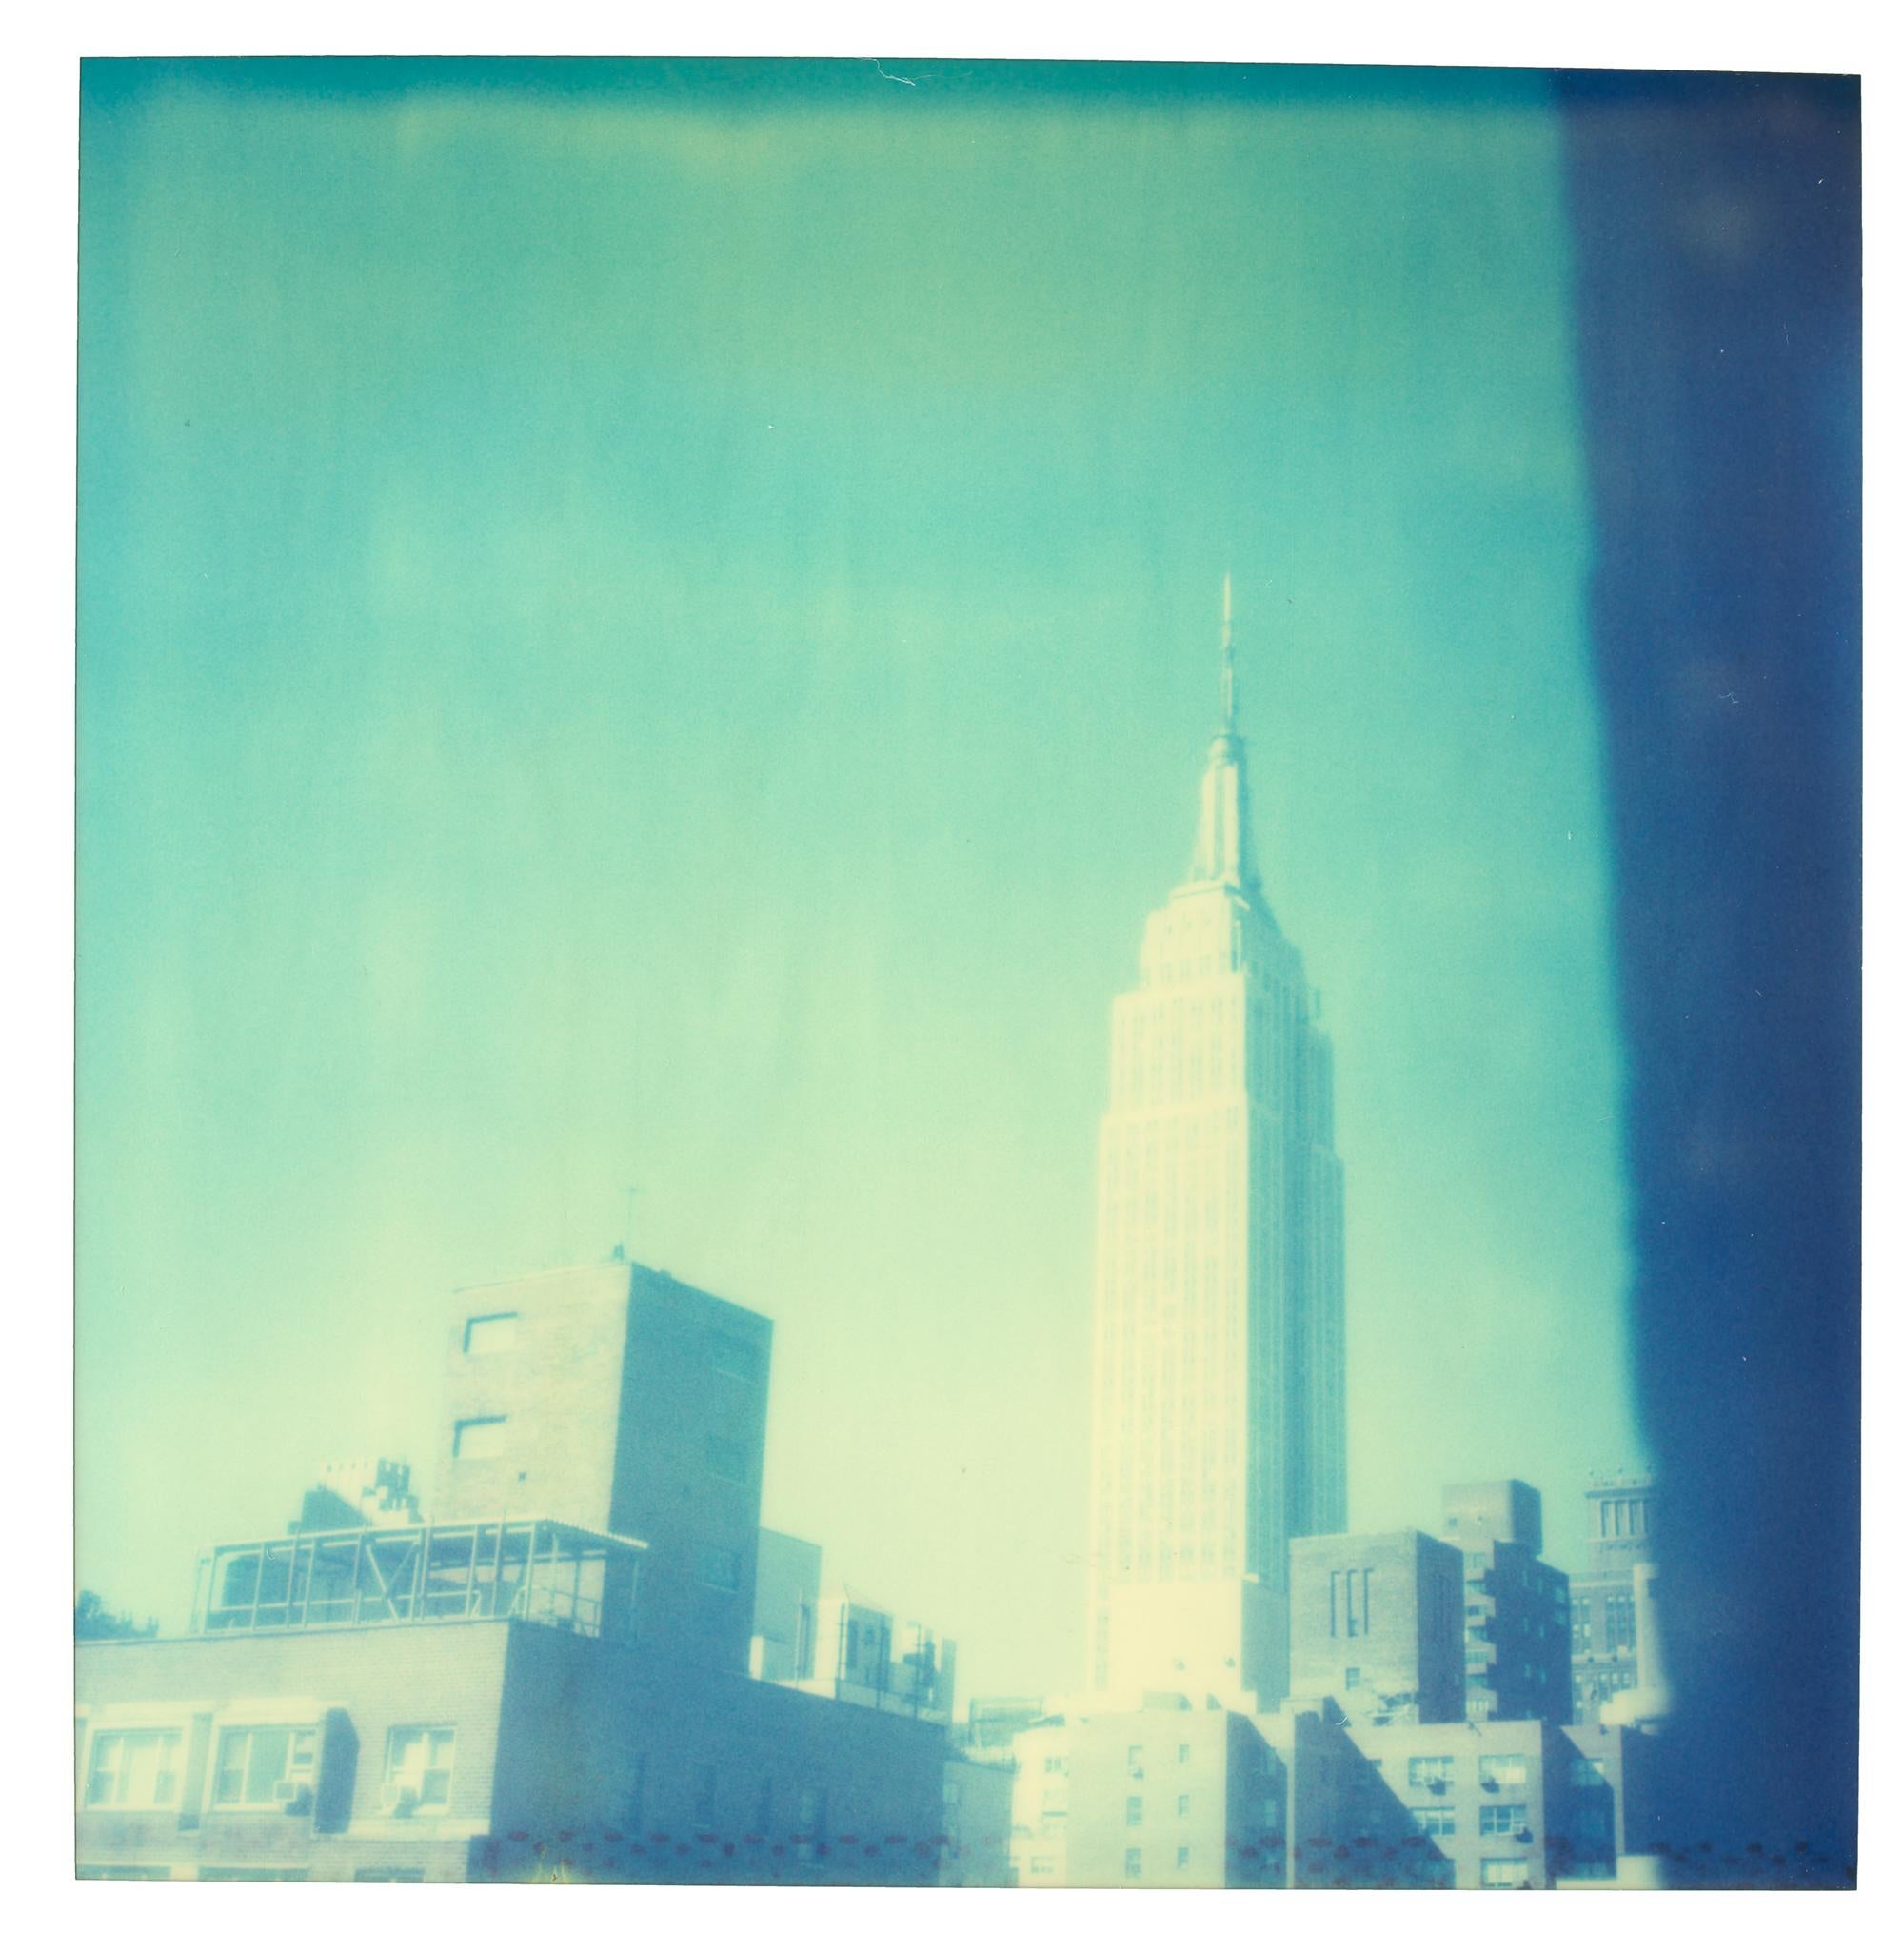 Stefanie Schneider Color Photograph - A Room with a View - Strange Love